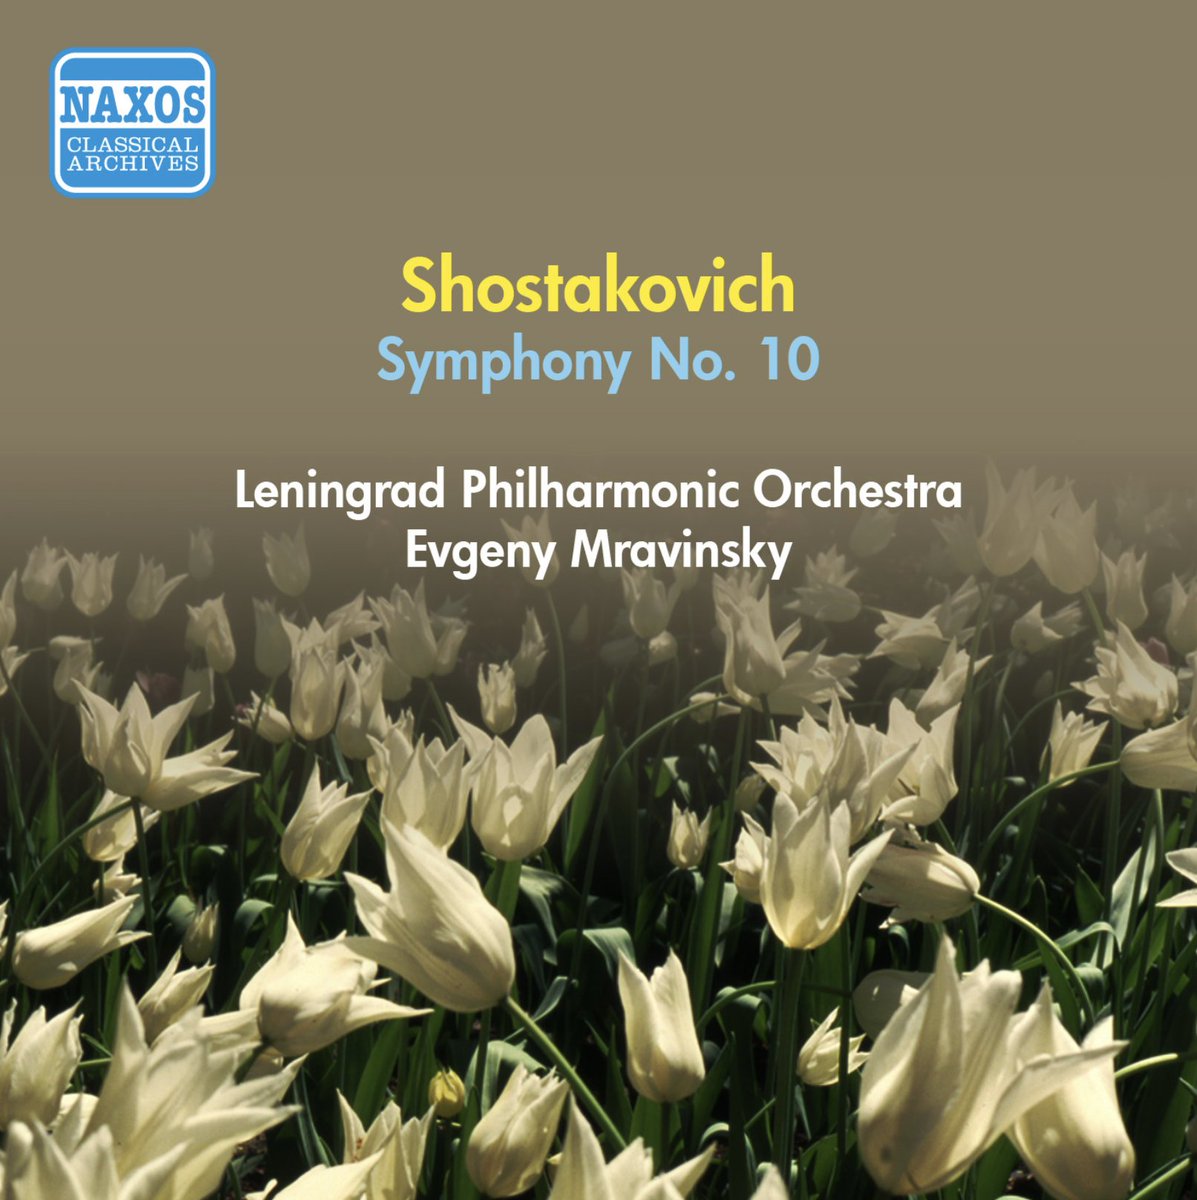 Shostakovich Symphony No. 10 in E Minor, Op. 93 Yevgeny Mravinsky Leningrad Philharmonic Orchestra